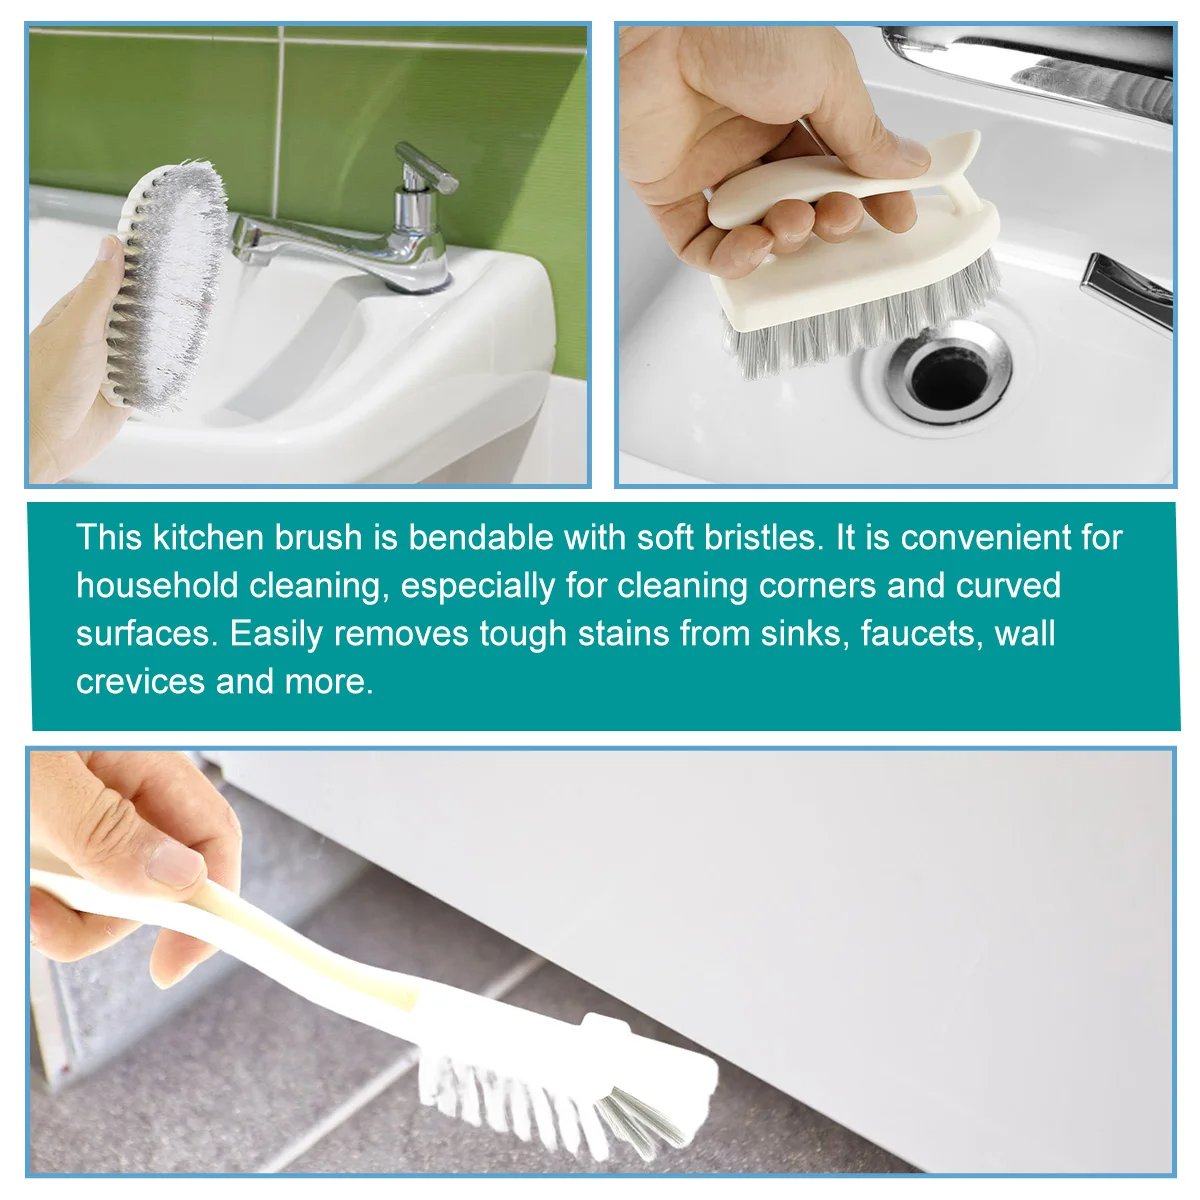 https://ae01.alicdn.com/kf/Sdfa36e539ebe4bf4b020981435366575O/6Pcs-Home-Cleaning-Brushes-Set-Multifunction-Long-Handle-Brush-Kitchen-Dish-Brush-with-Comfortable-Grip-Bendable.jpg